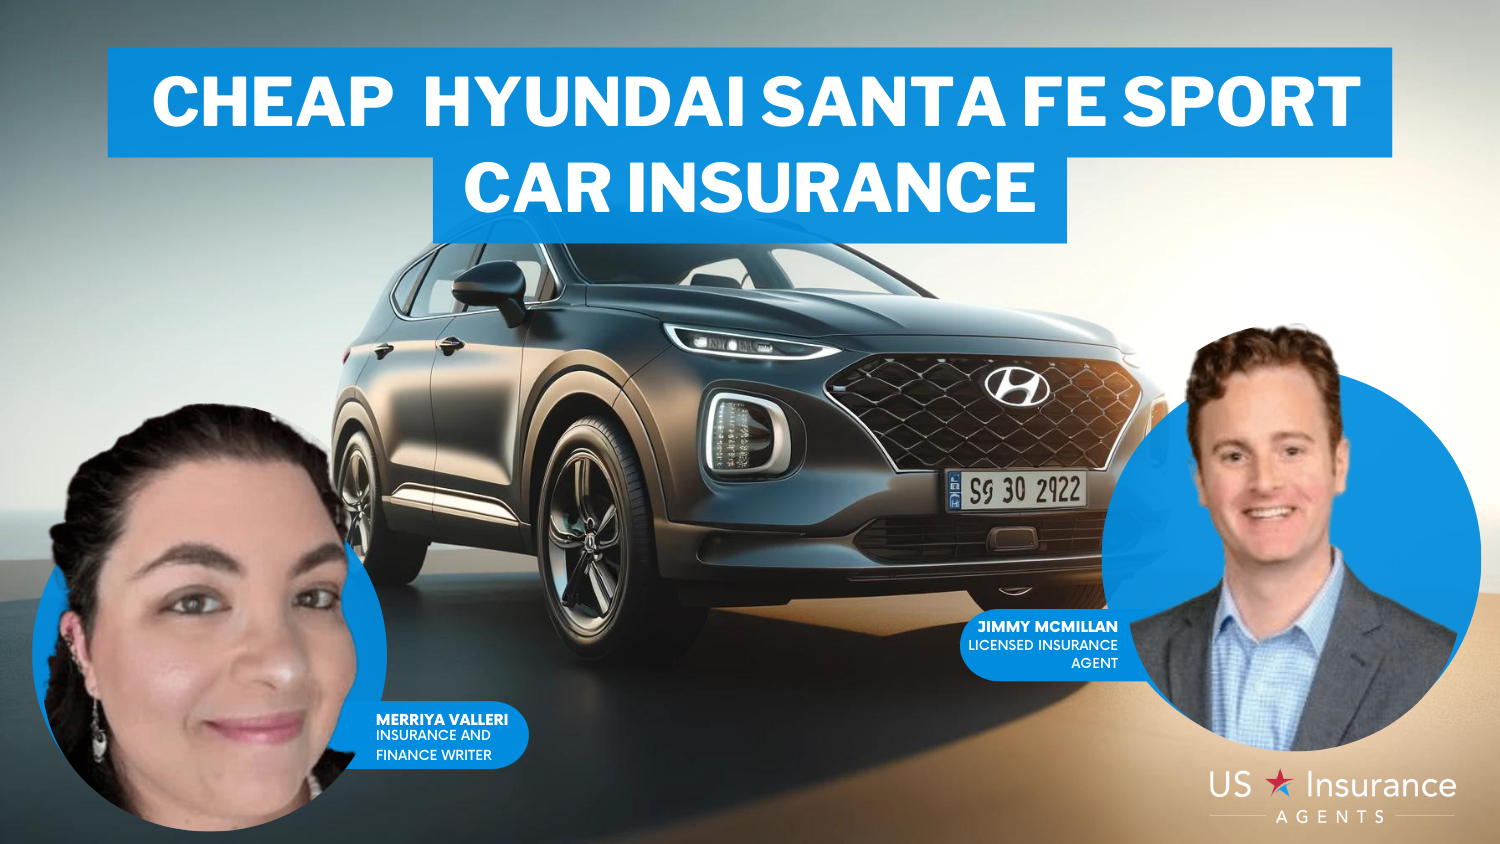 Cheap Hyundai Santa Fe Sport Car Insurance: Erie, State Farm, and Progressive